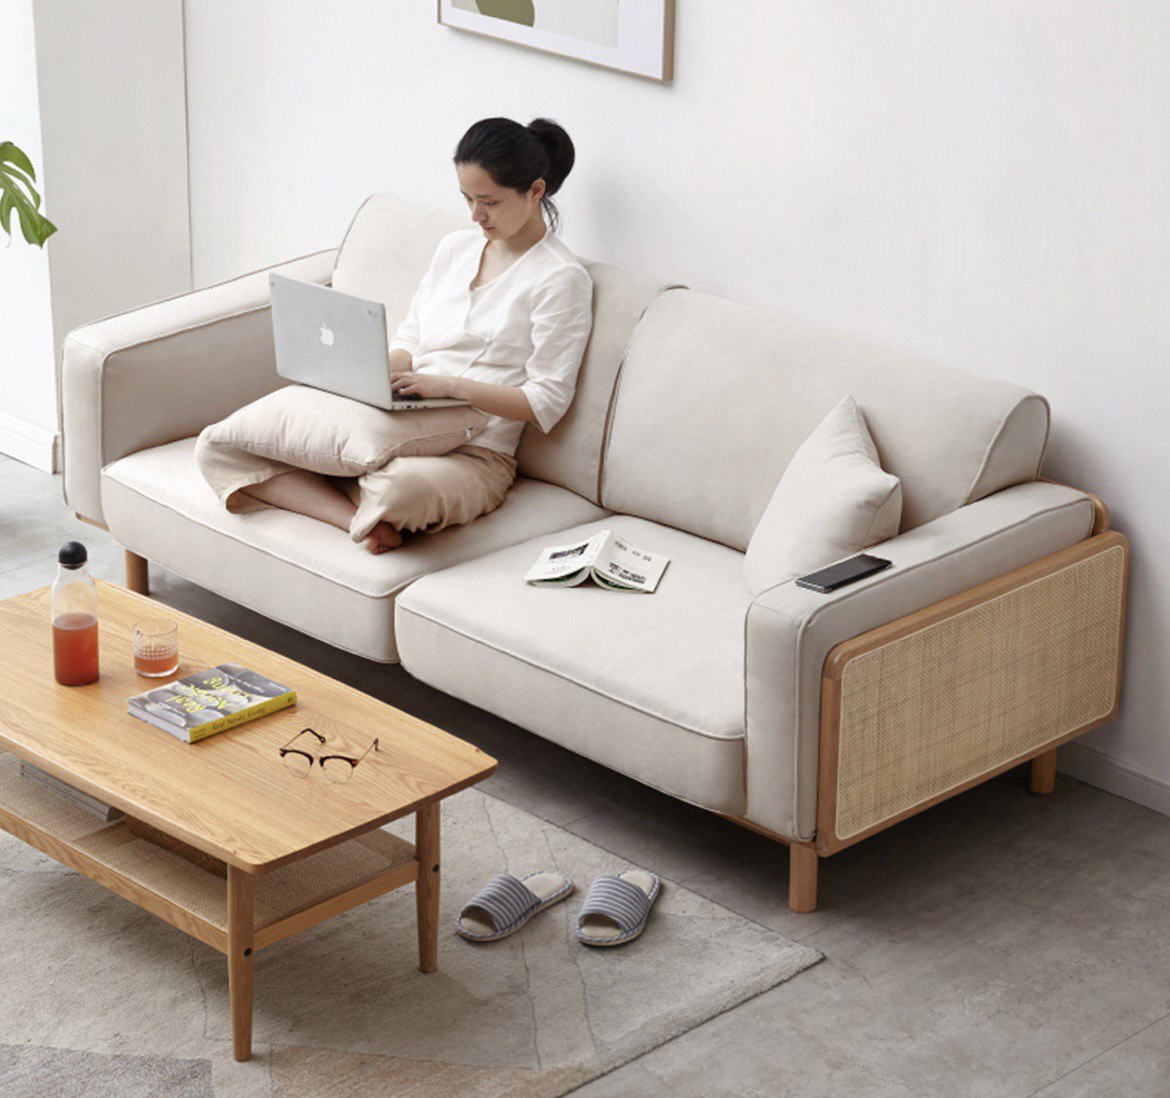 IUIGA furniture collections - Yuri